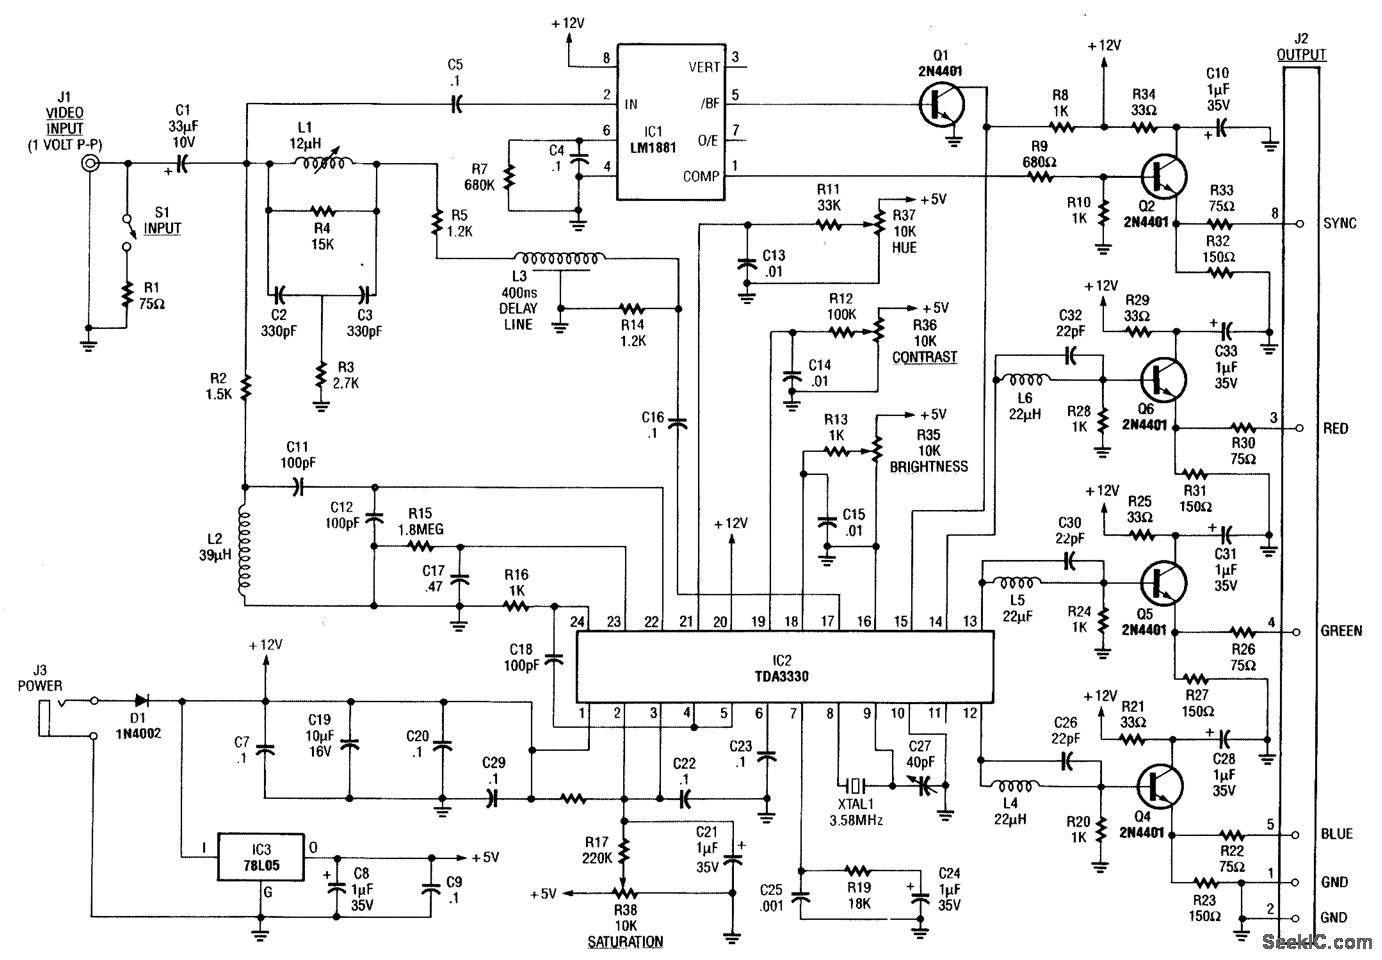 NTSC-RGB converter circuit